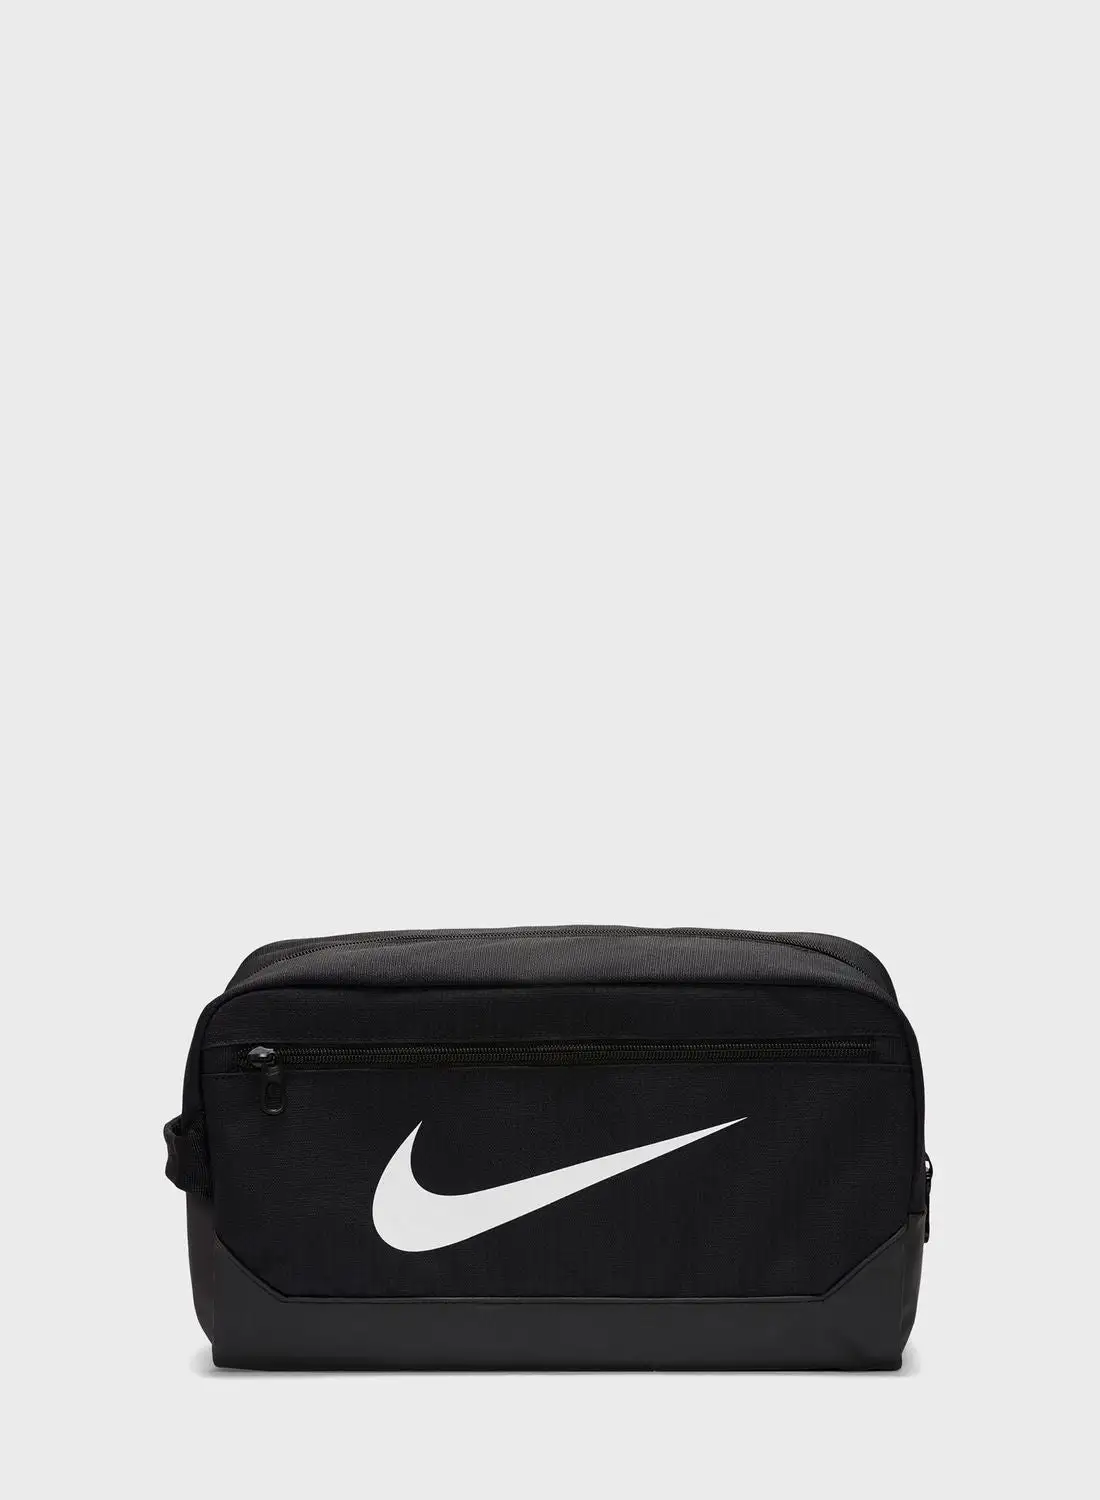 Nike Brasilia Shoe Bag - 11L